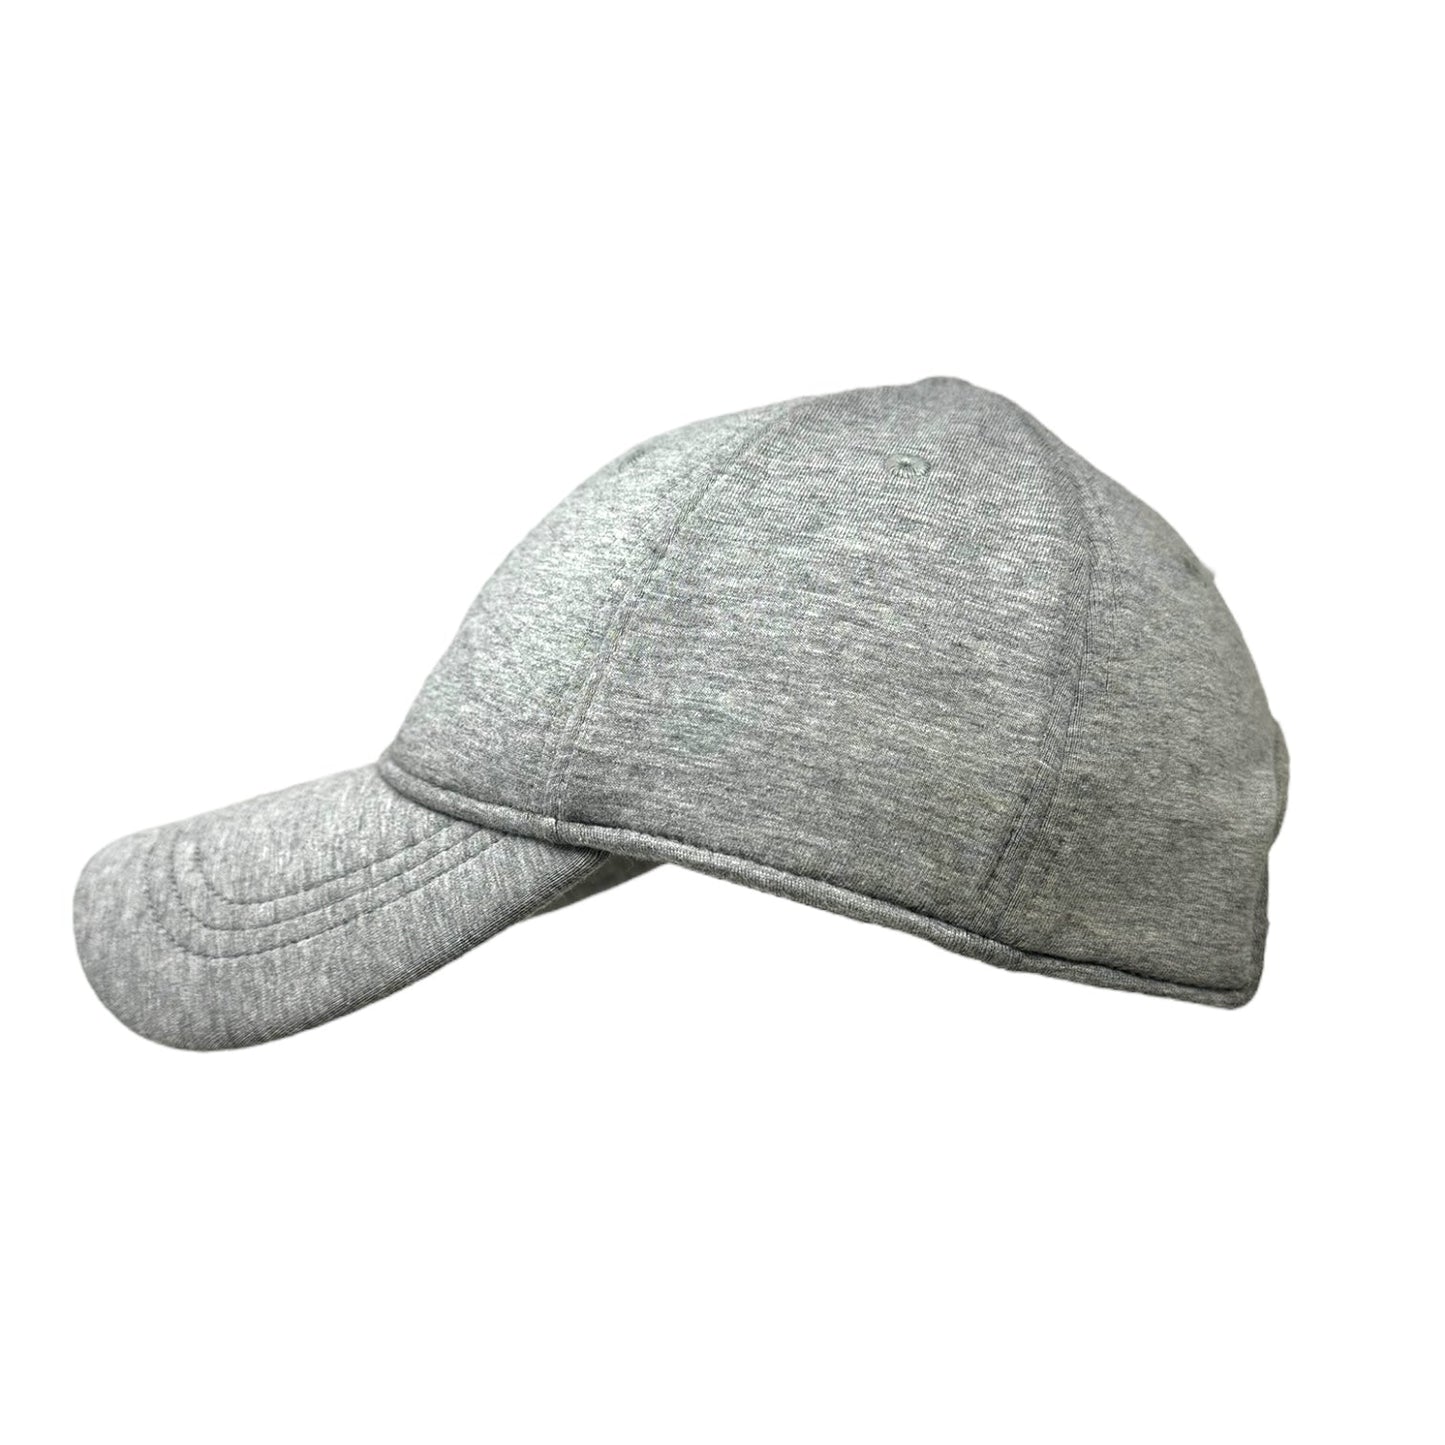 Baller Hat - Heathered Medium Grey By Lululemon